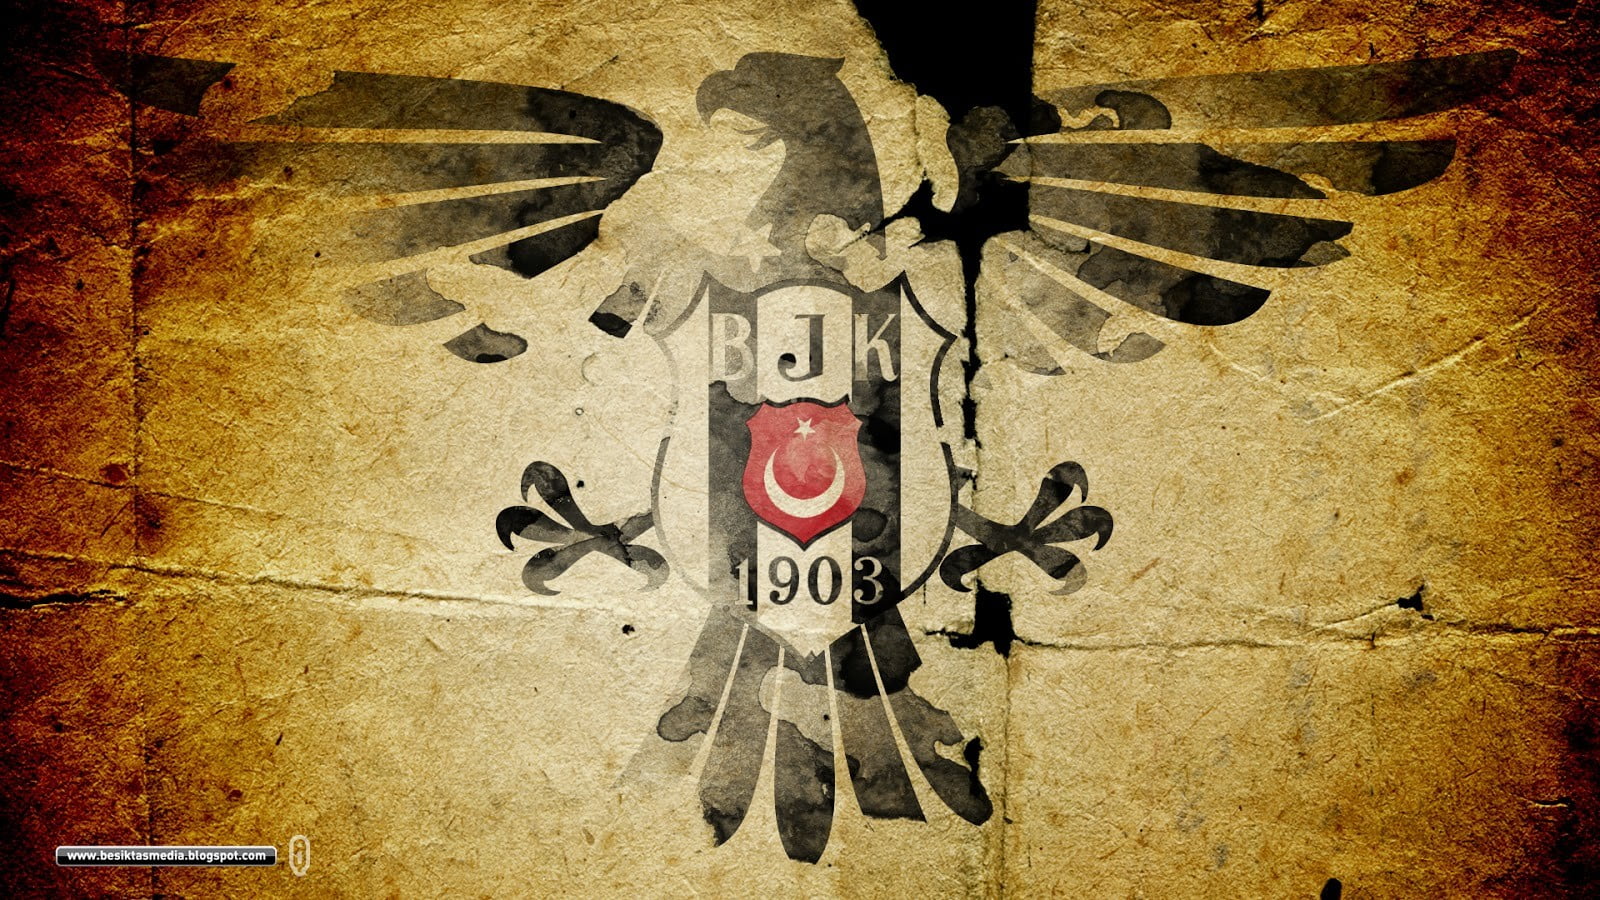 Besiktas 1903 logo wallpaper, Besiktas J.K., eagle, love, soccer clubs